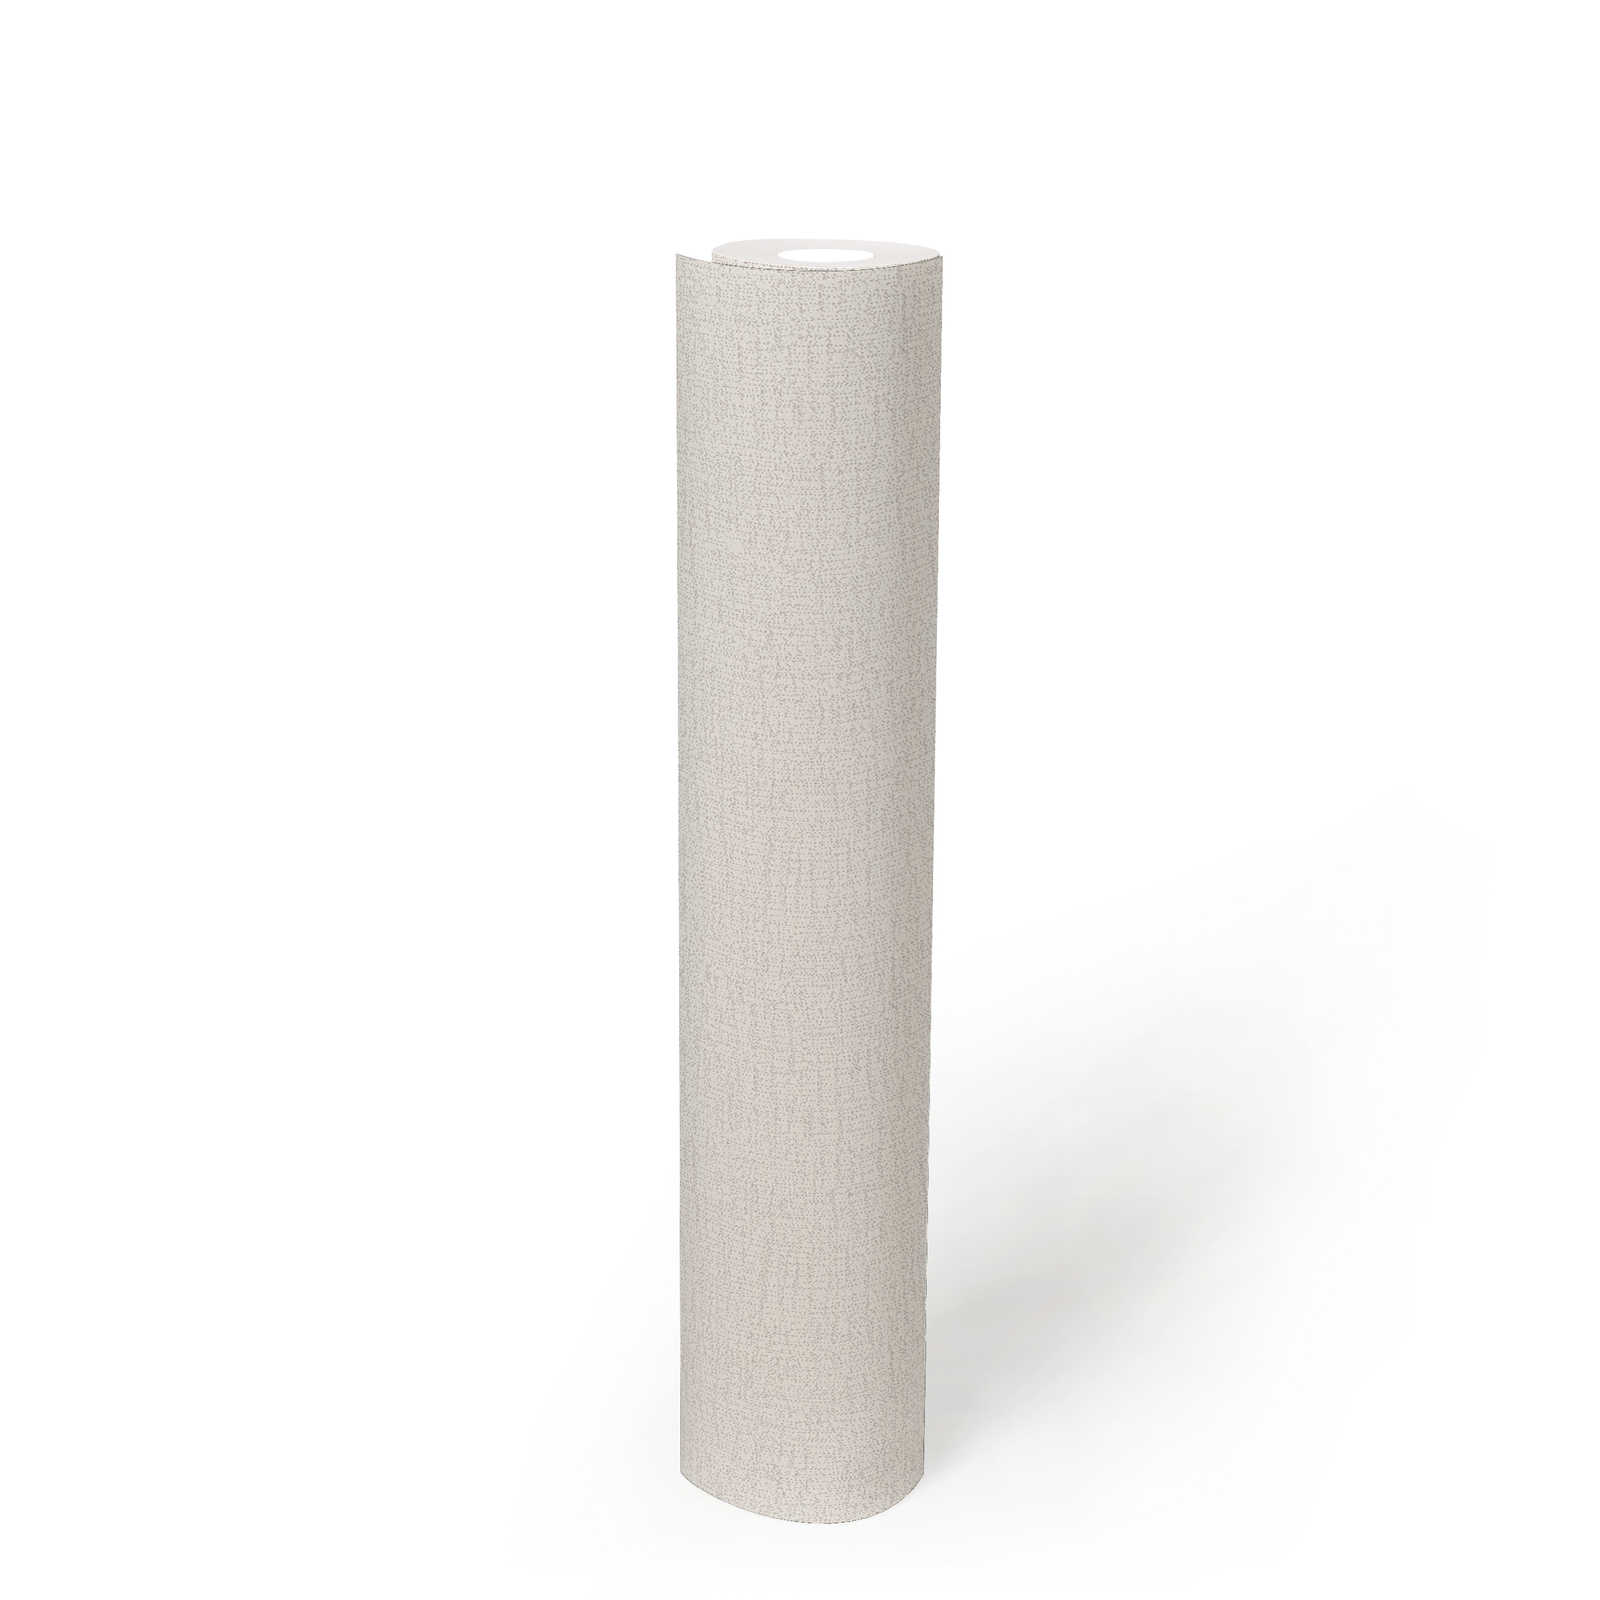             Non-woven wallpaper neutral cream with textured pattern - cream
        